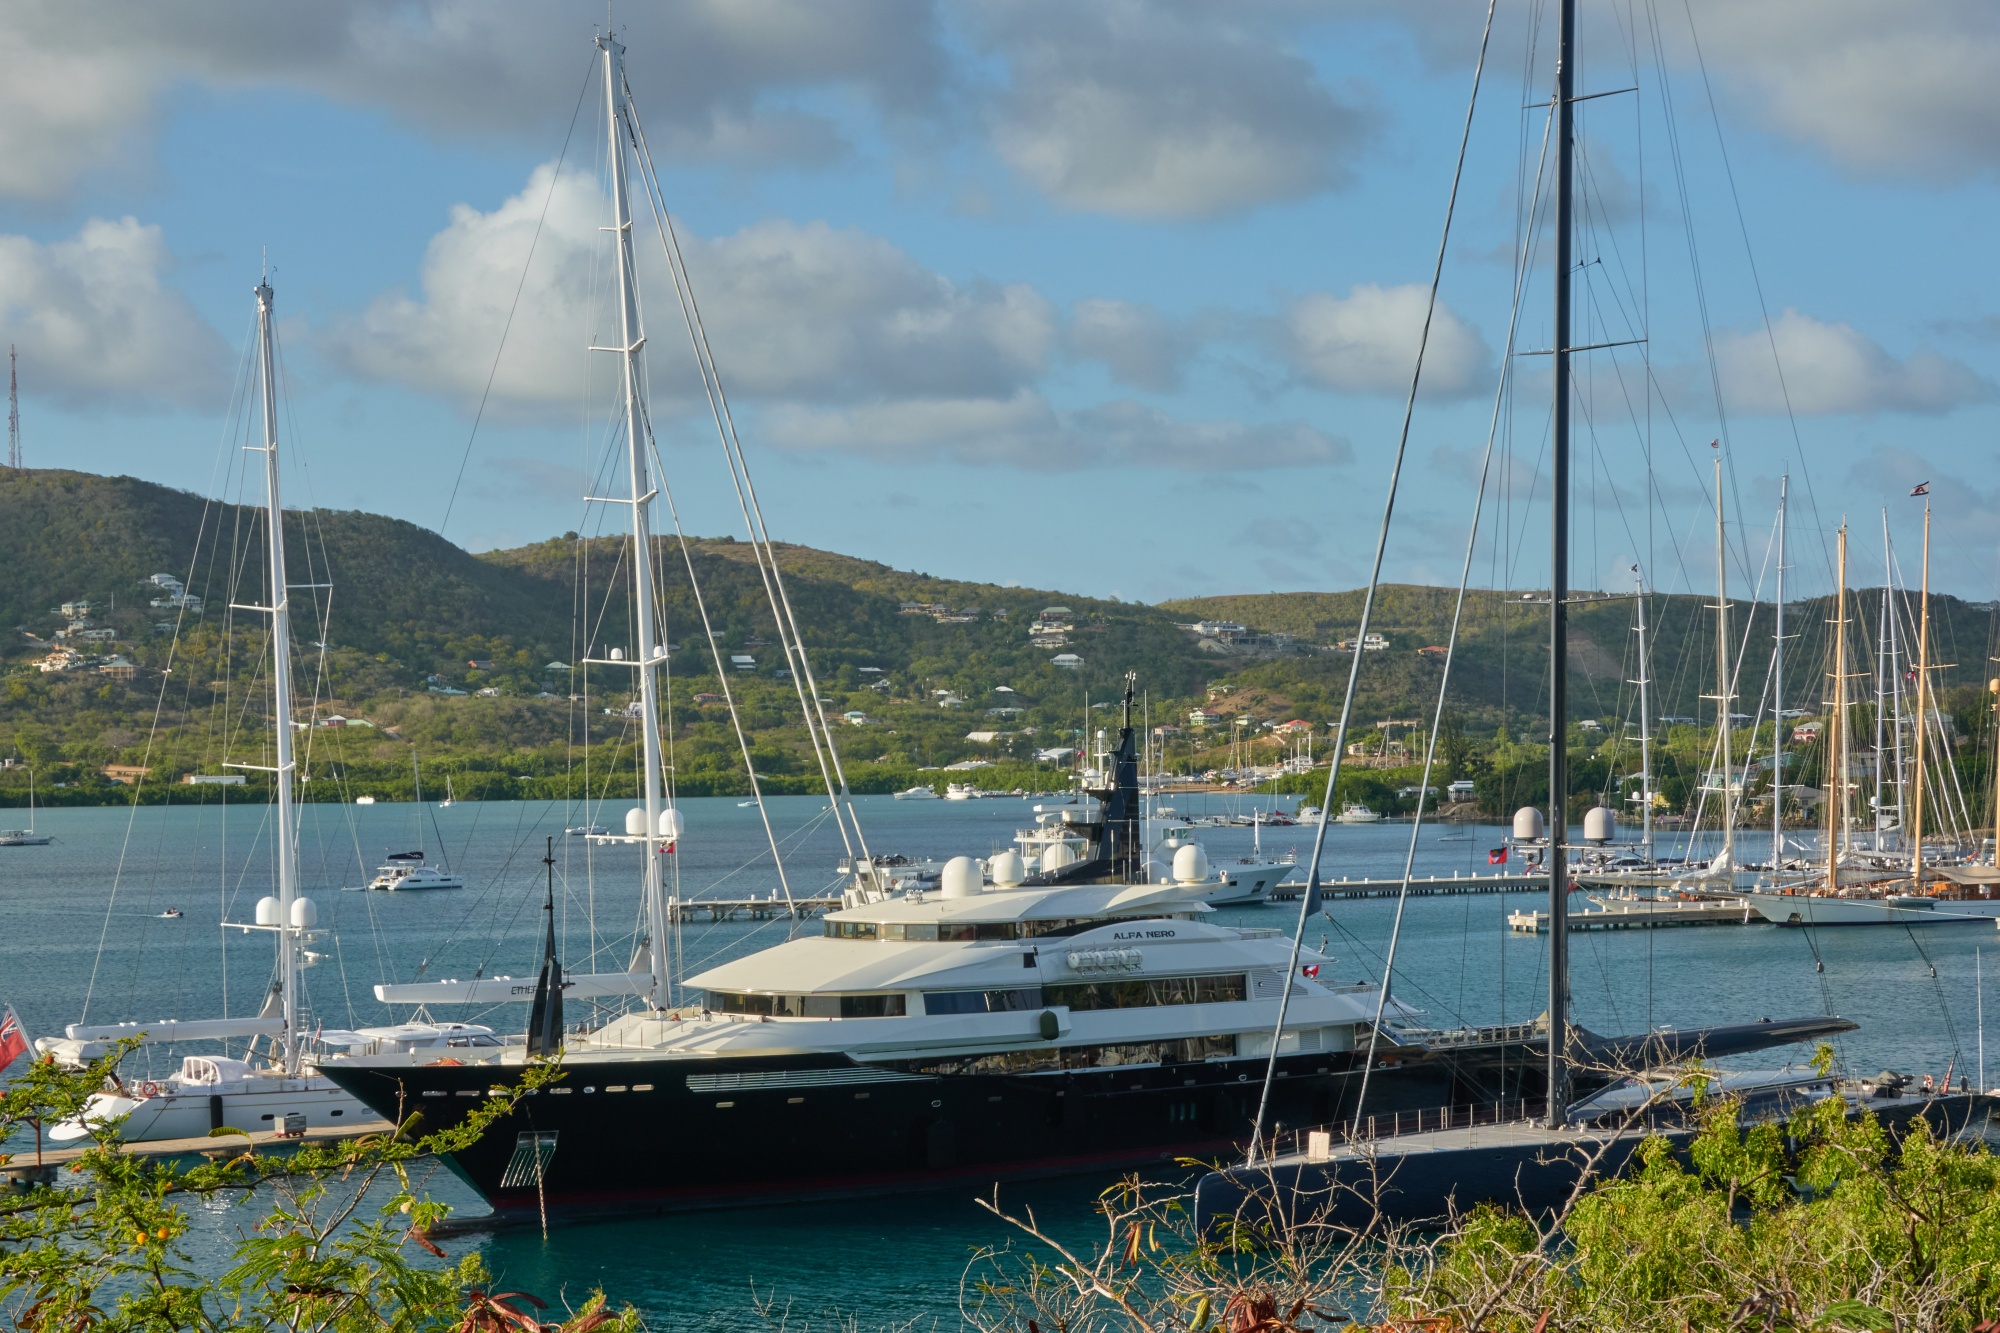 The superyacht Alfa Nero docked in Antigua on&nbsp;April 19.